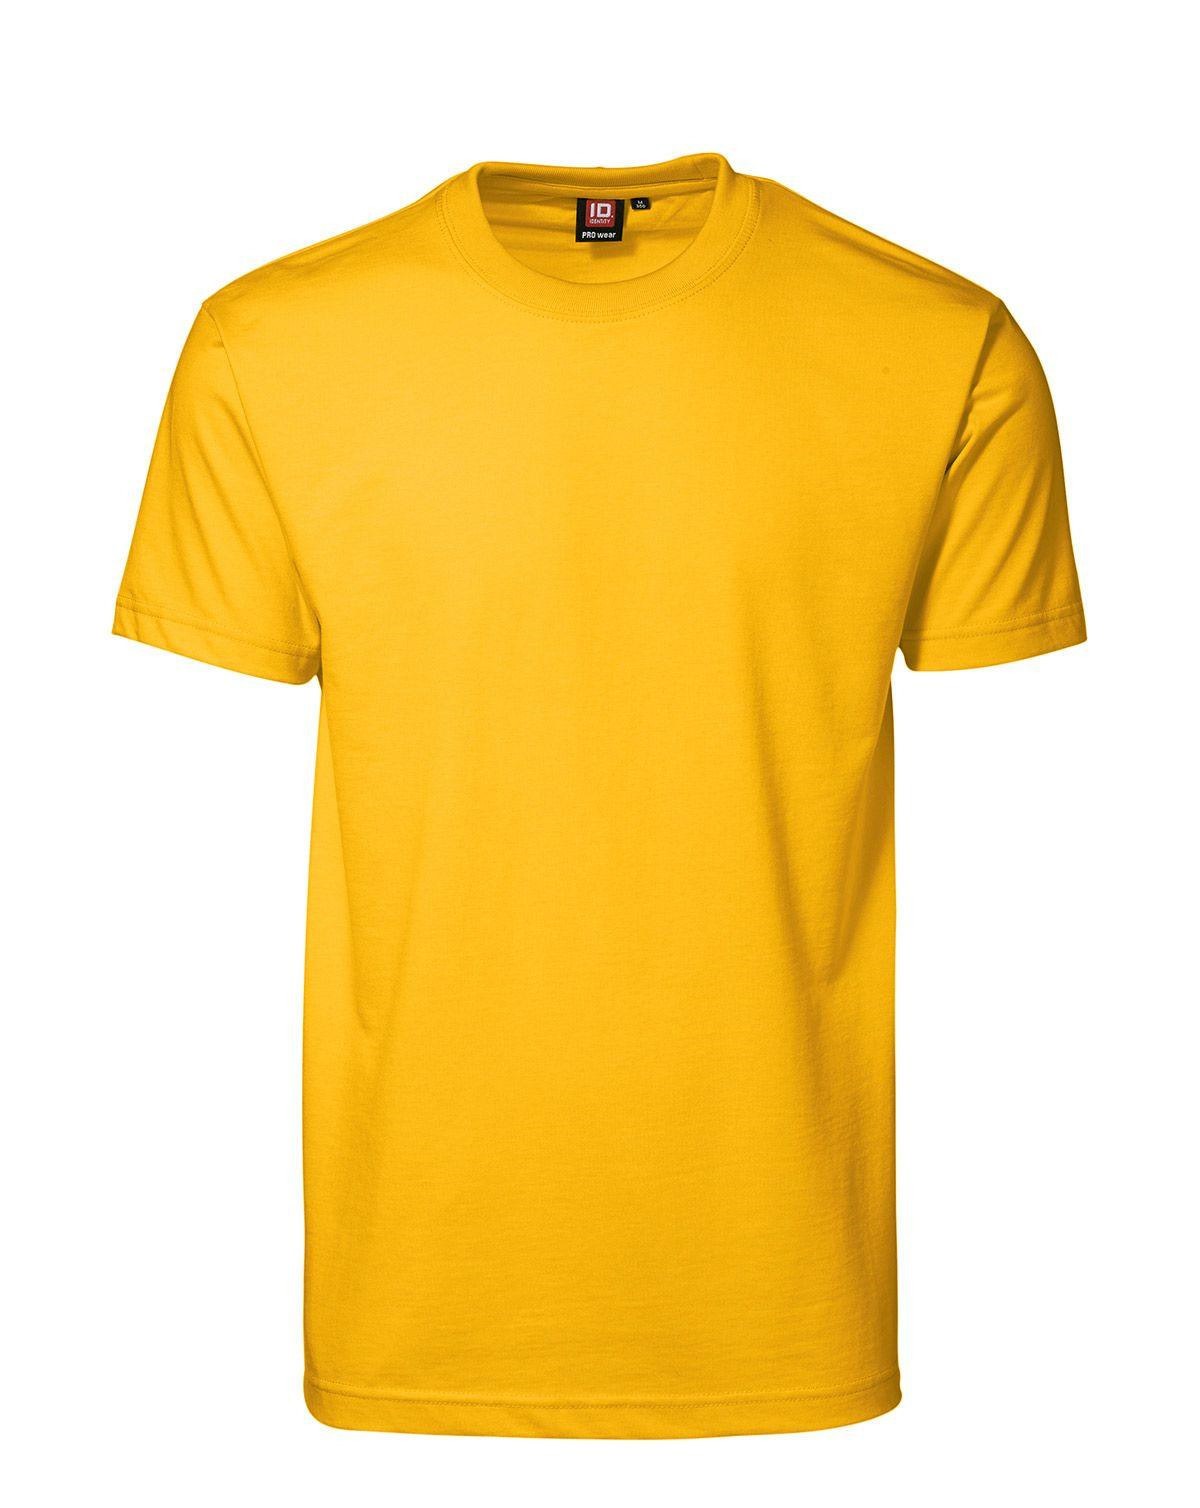 ID PRO Wear T-shirt til Herre (Gul, 4XL)